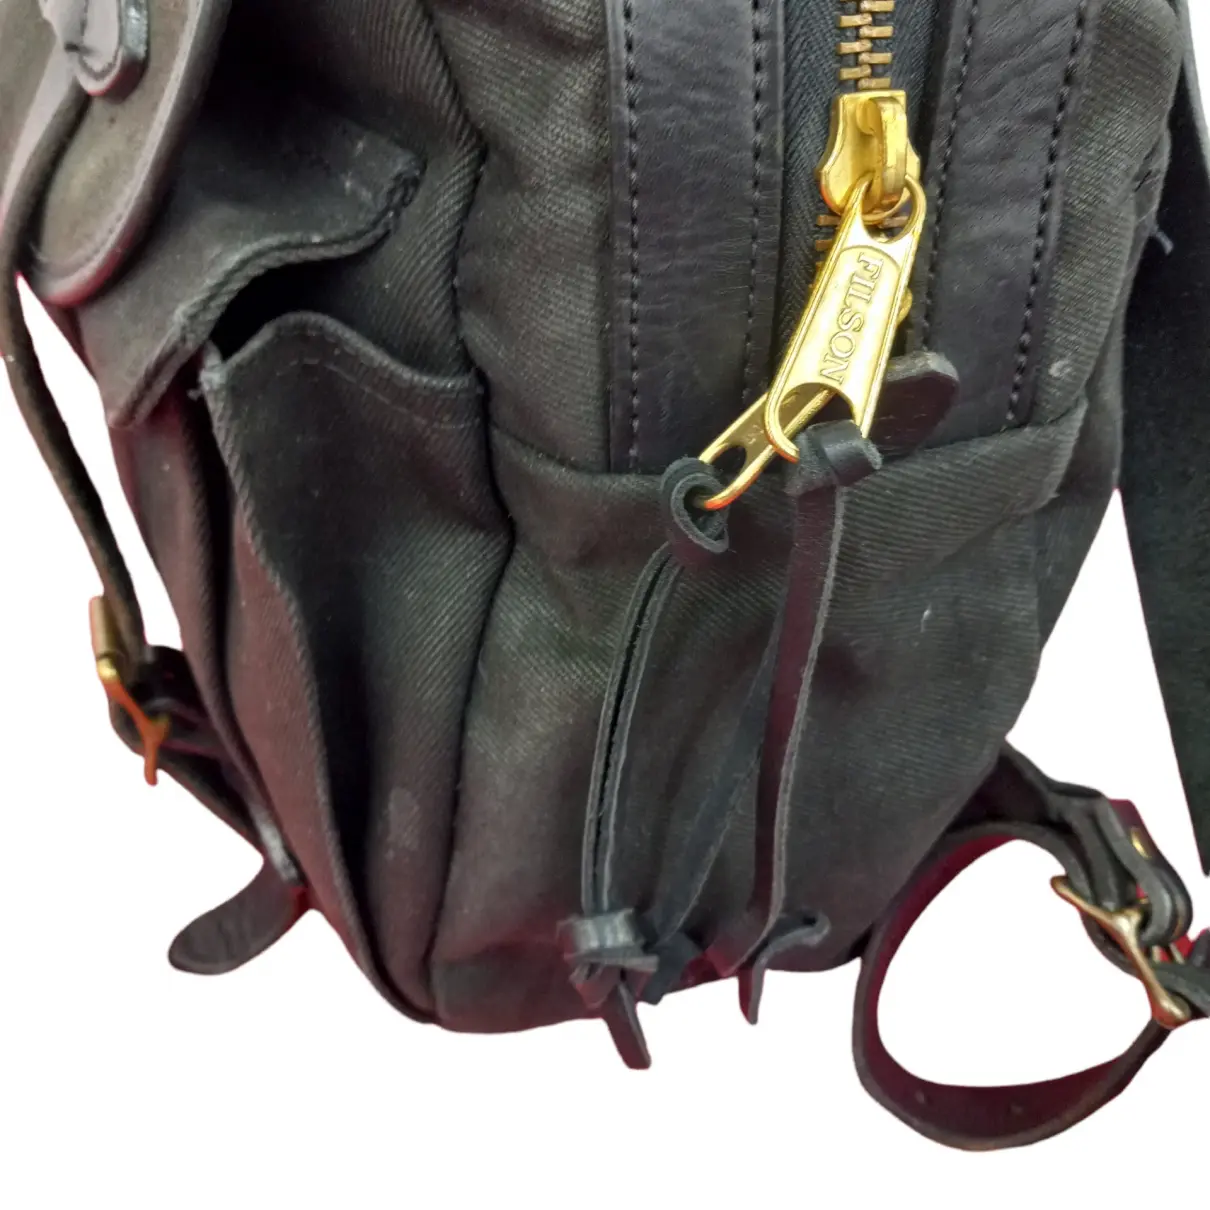 Leather satchel Filson